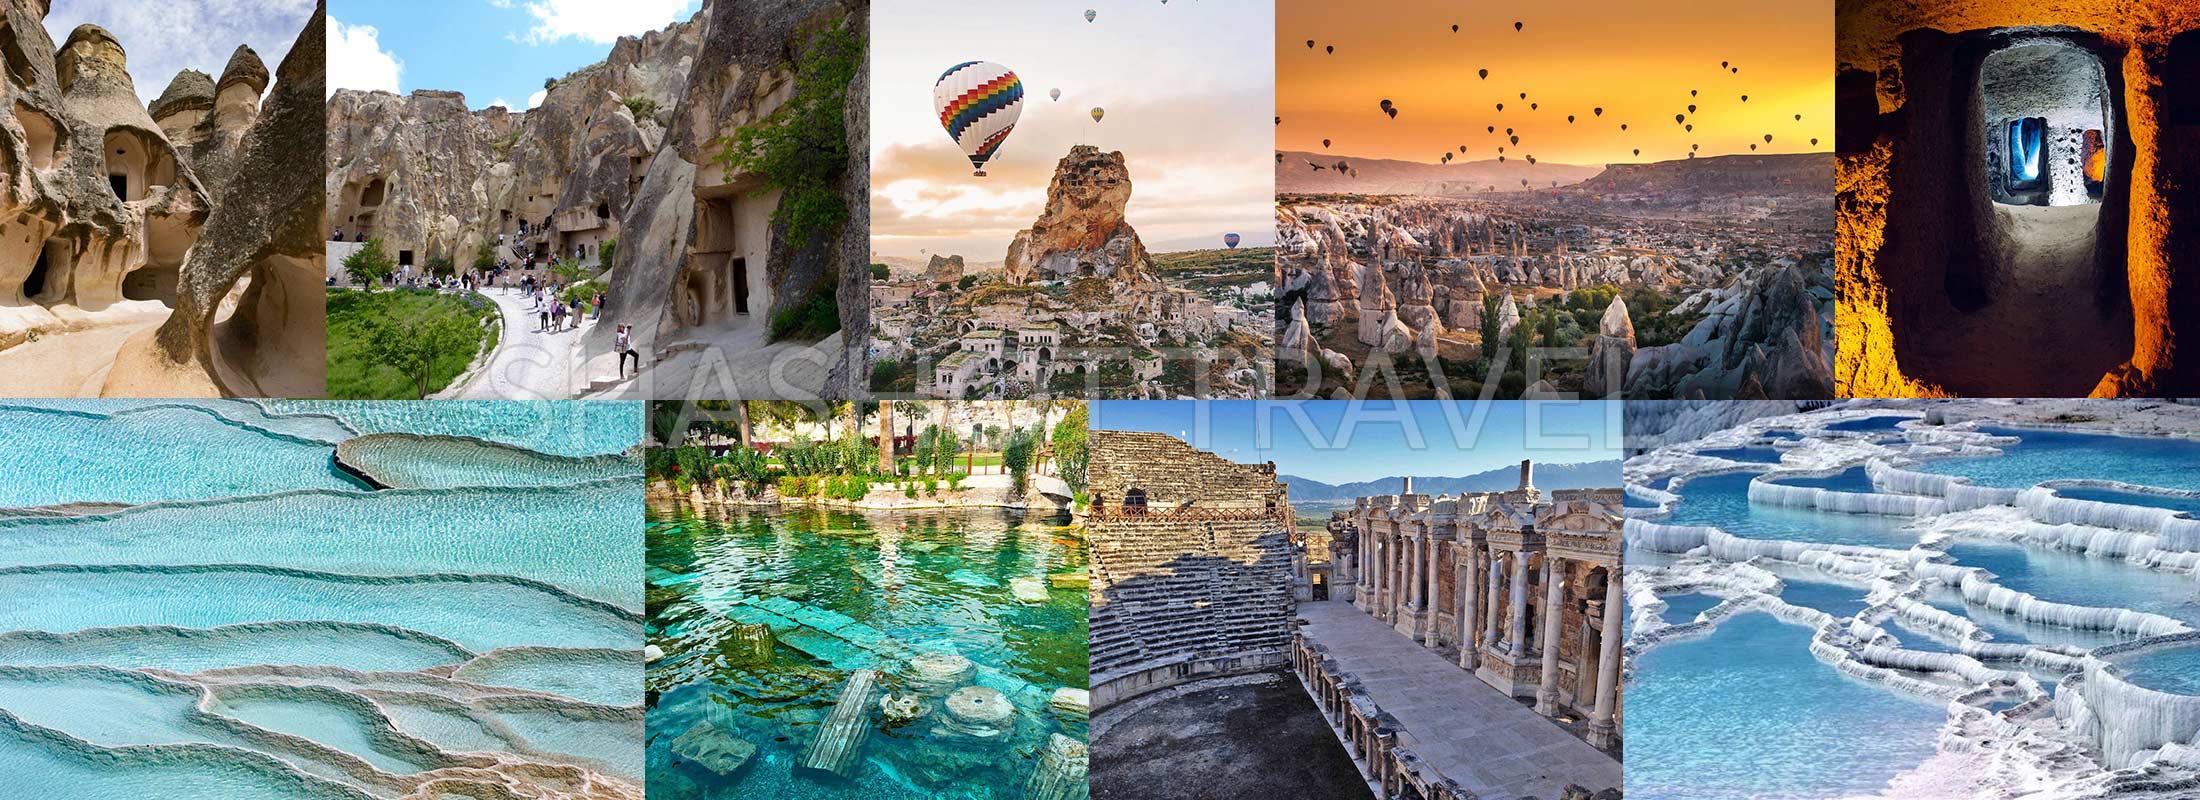 3-DAYS-TURKEY-PACKAGE-TOUR-CAPPADOCIA-PAMUKKALE-HIERAPOLIS-BY-FLIGHT